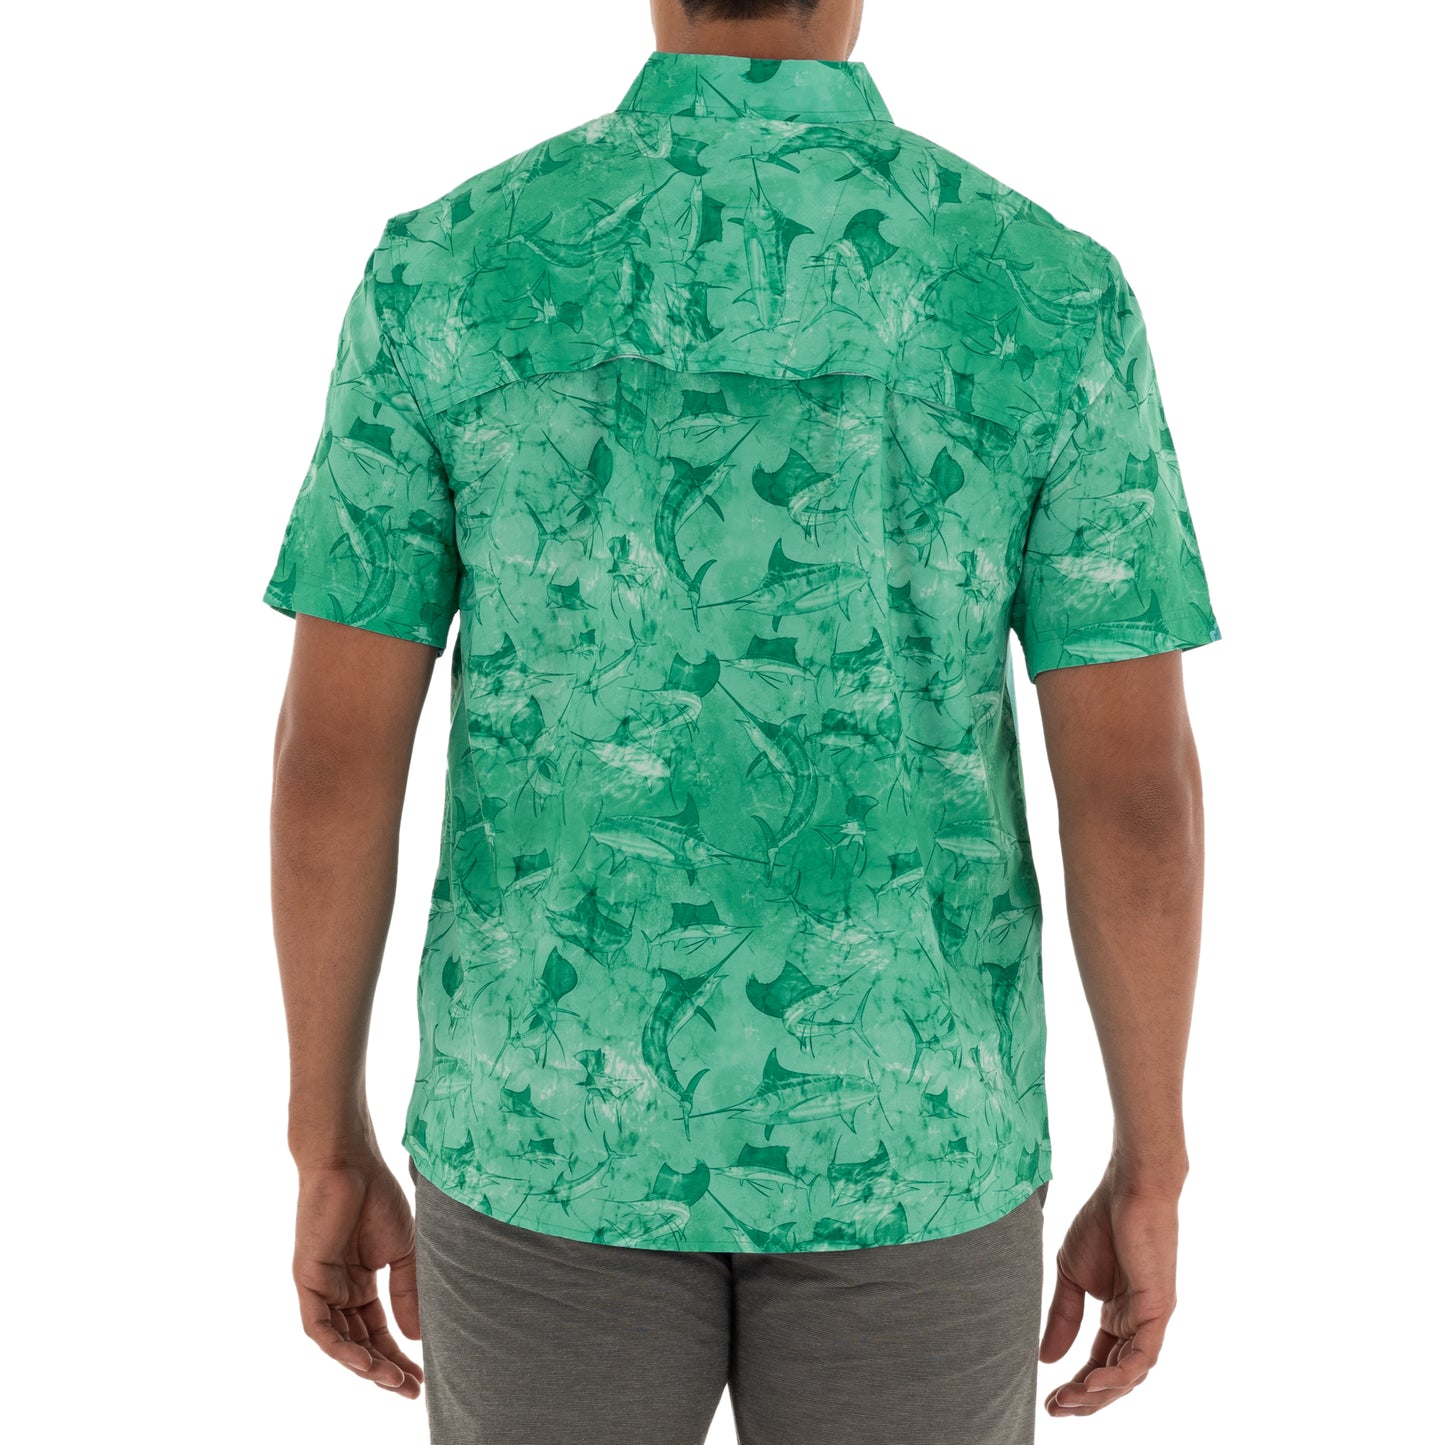 Men's Short Sleeve Printed Turquoise Fishing Shirt